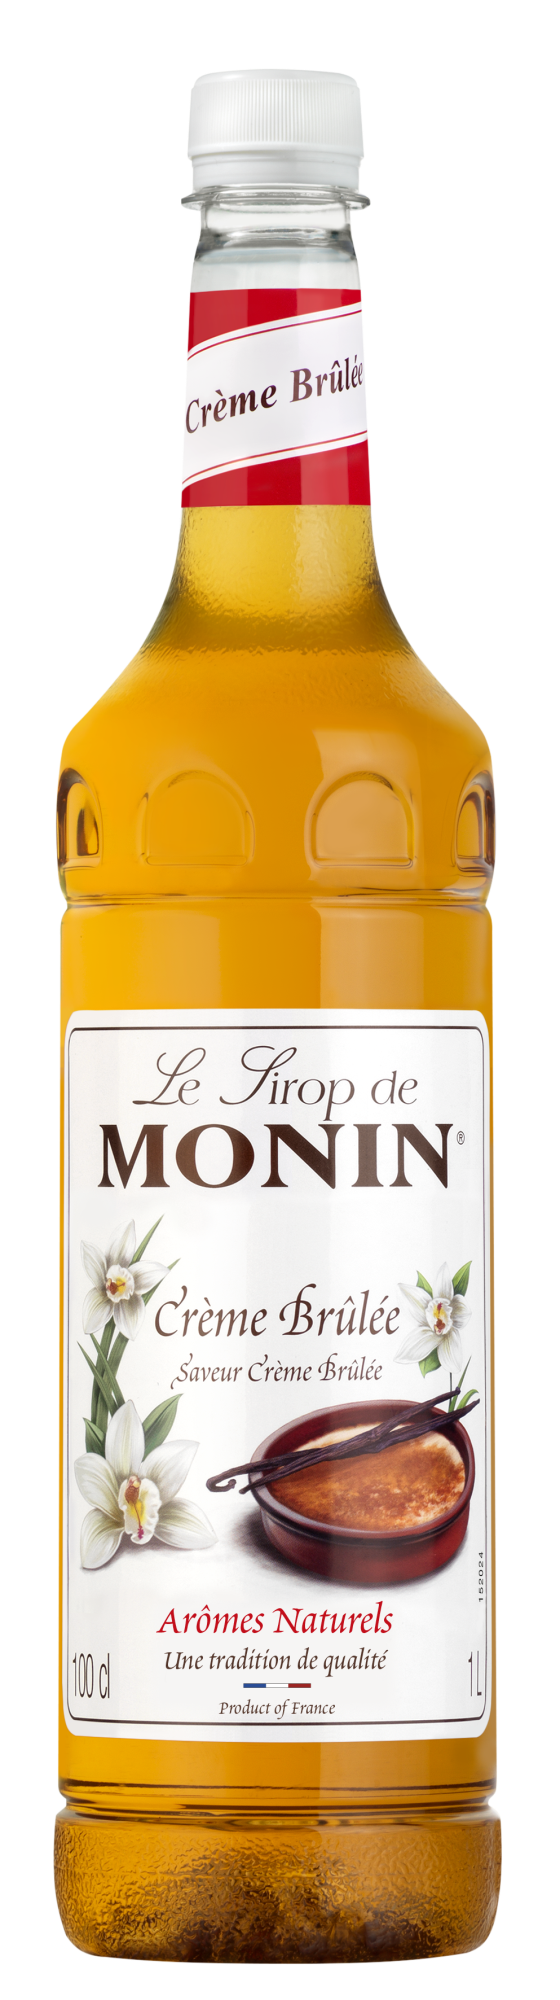 MONIN Premium Creme Brulee Syrup 1L